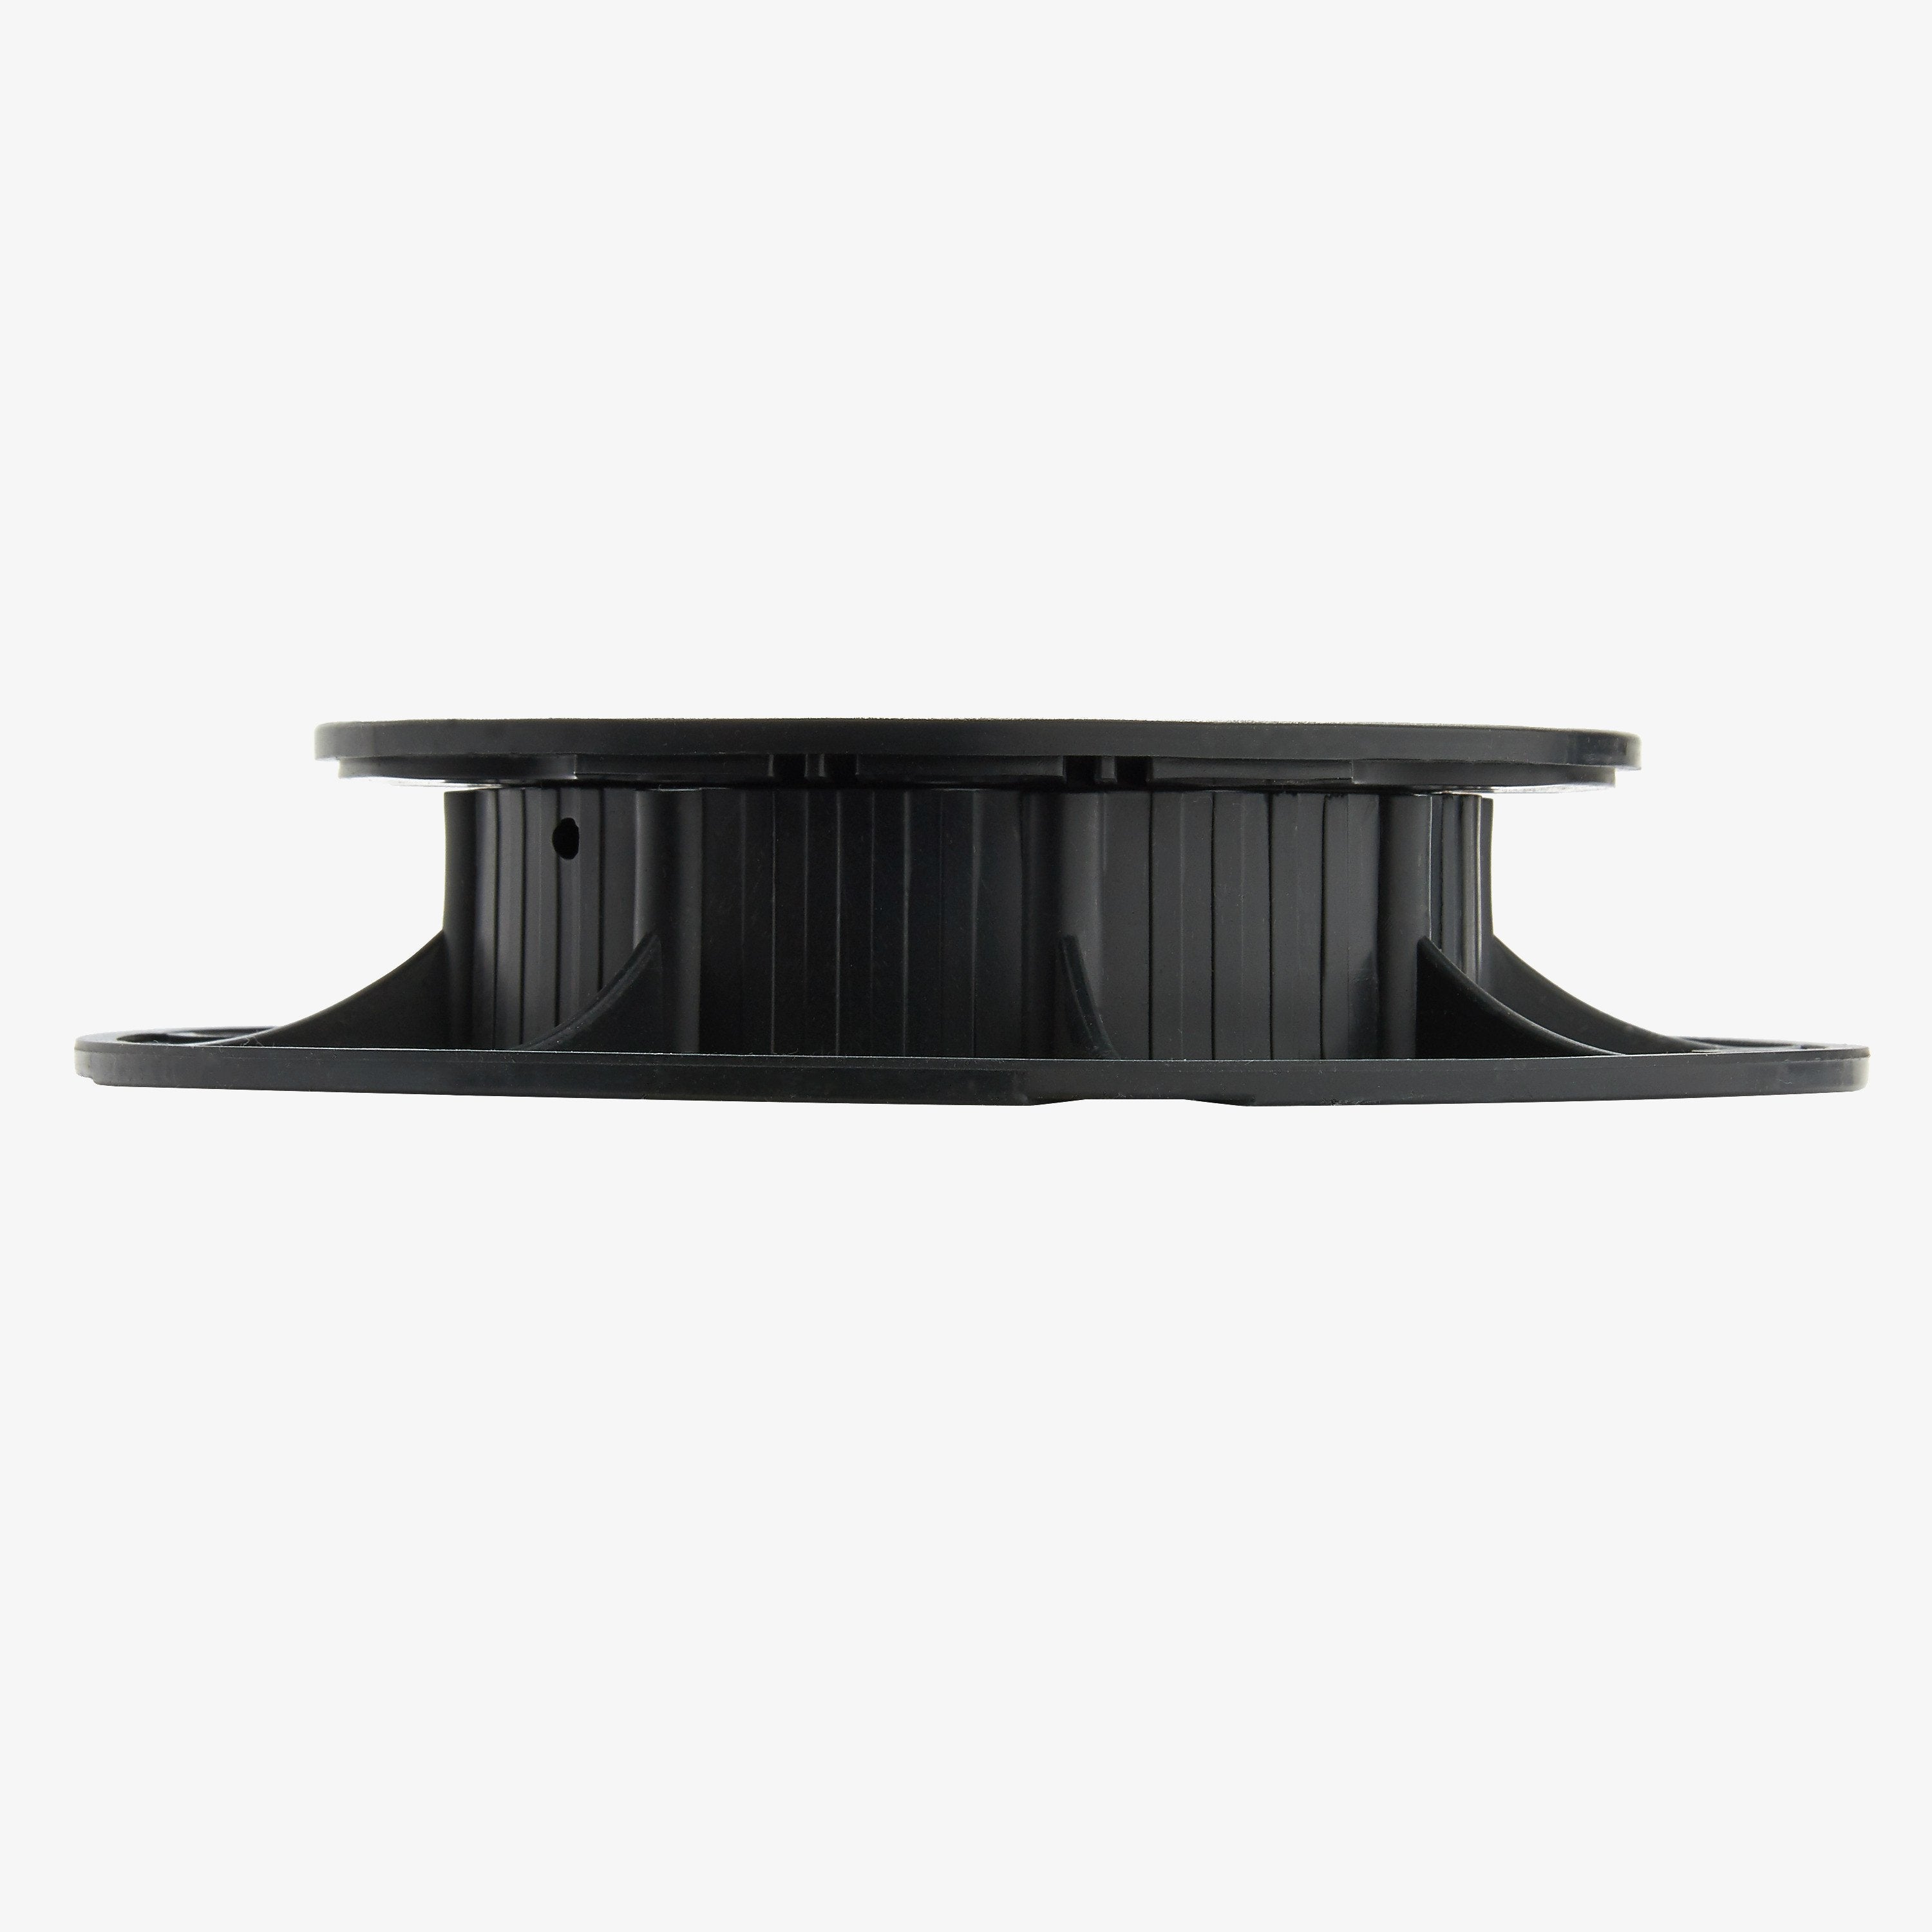 Adjustable decking joist support riser - MESA Pedestals